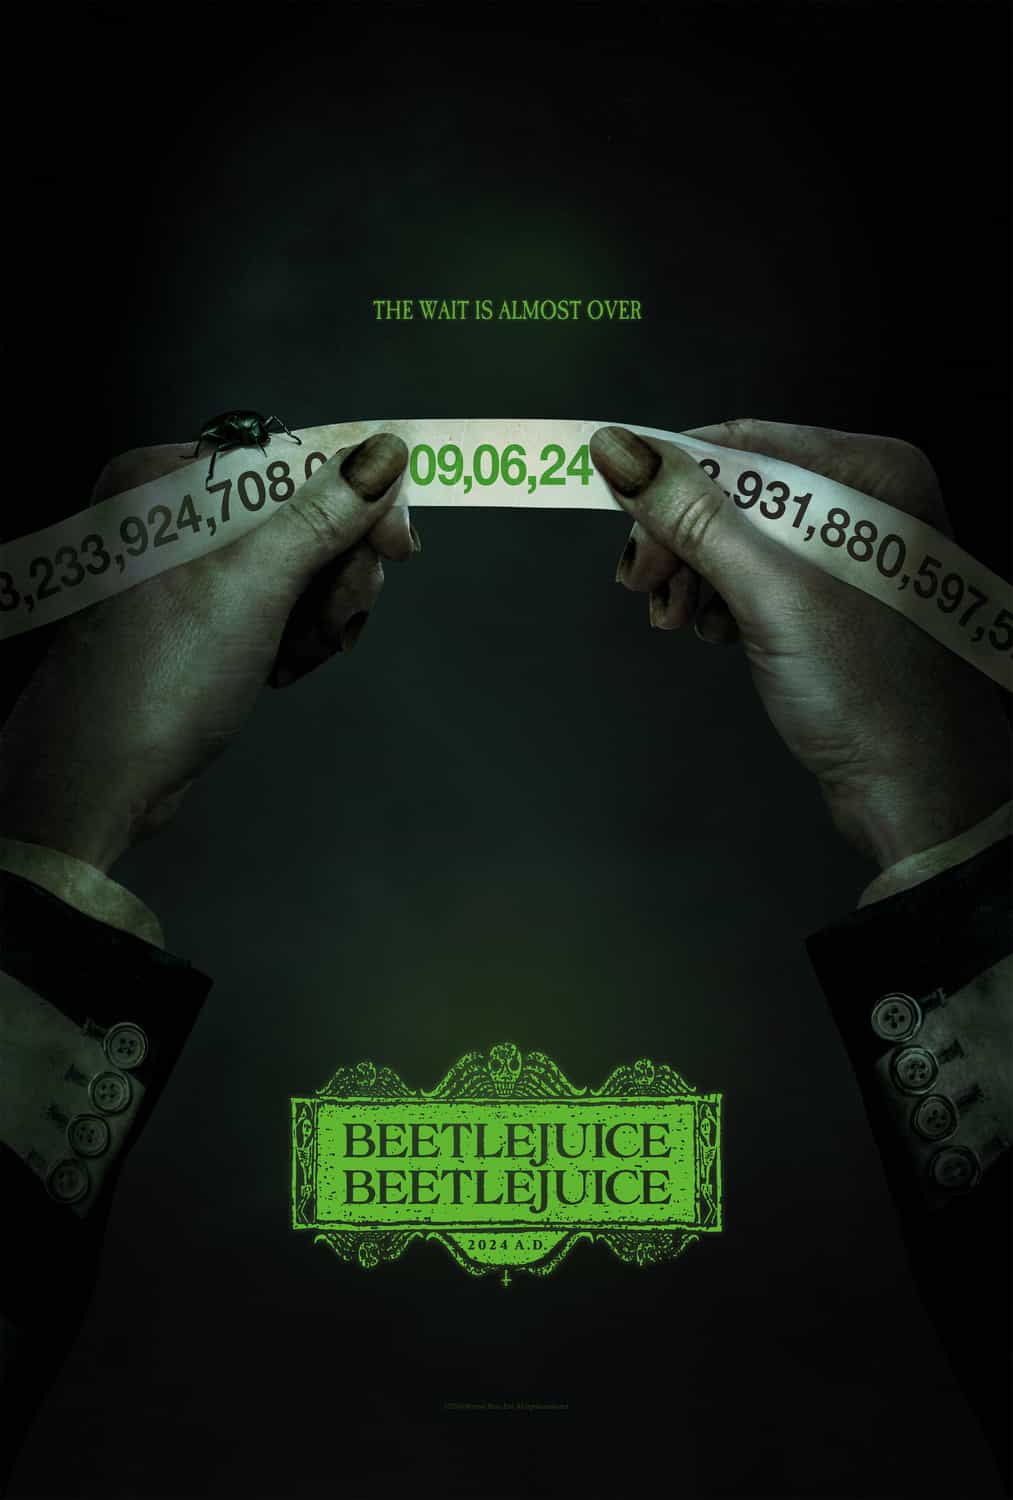 New poster has been released for Beetlejuice Beetlejuice which stars Michael Keaton and Jenna Ortega - movie UK release date 6th September 2024 #beetlejuicebeetlejuice